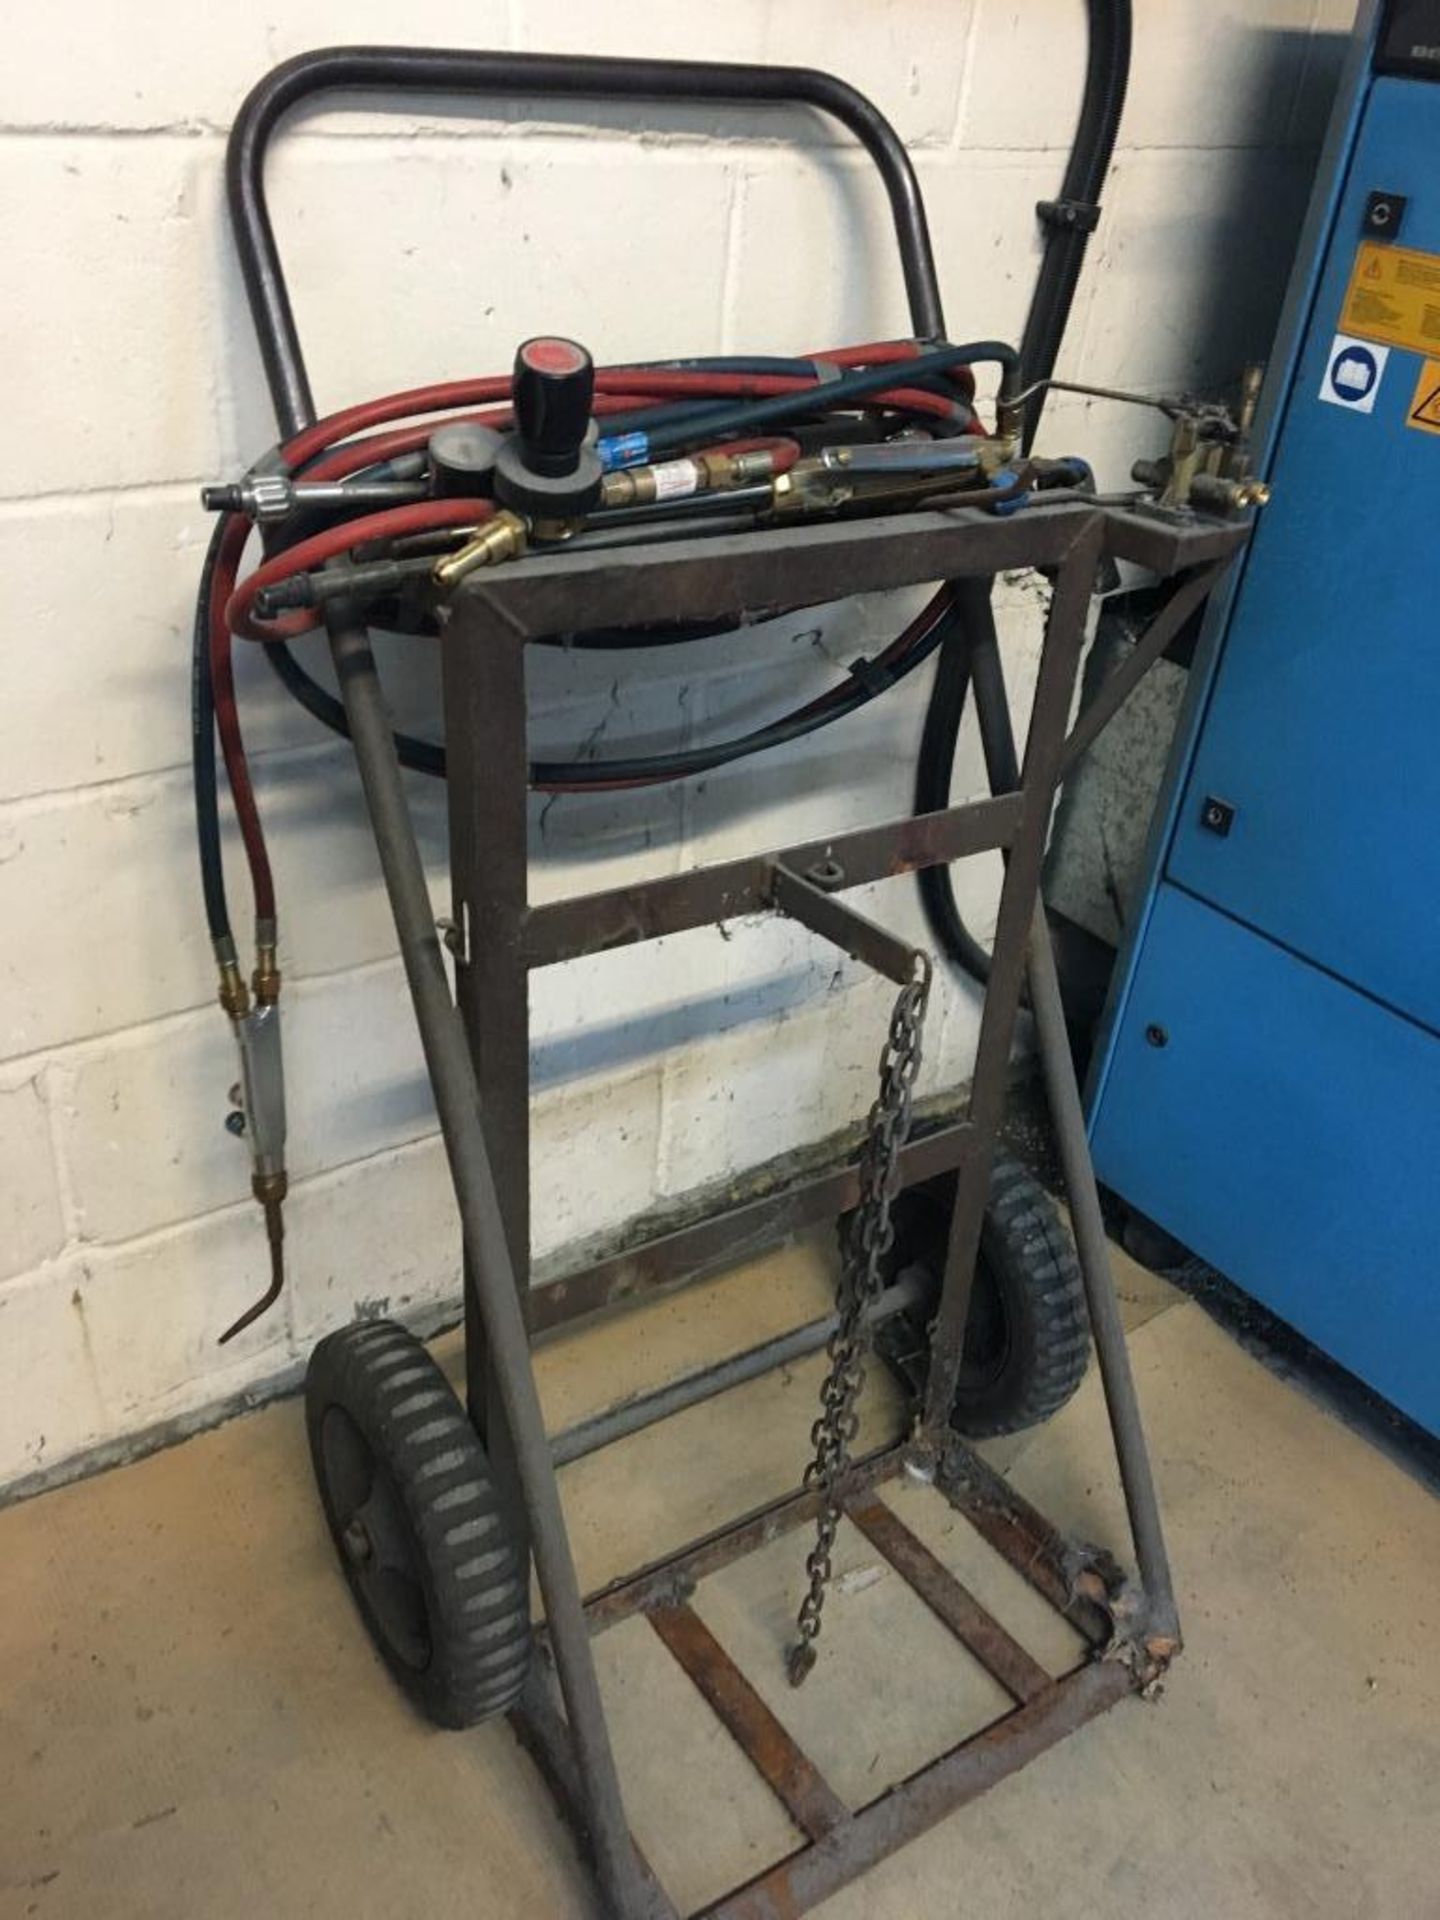 Oxy-acetylene welding set and trolley